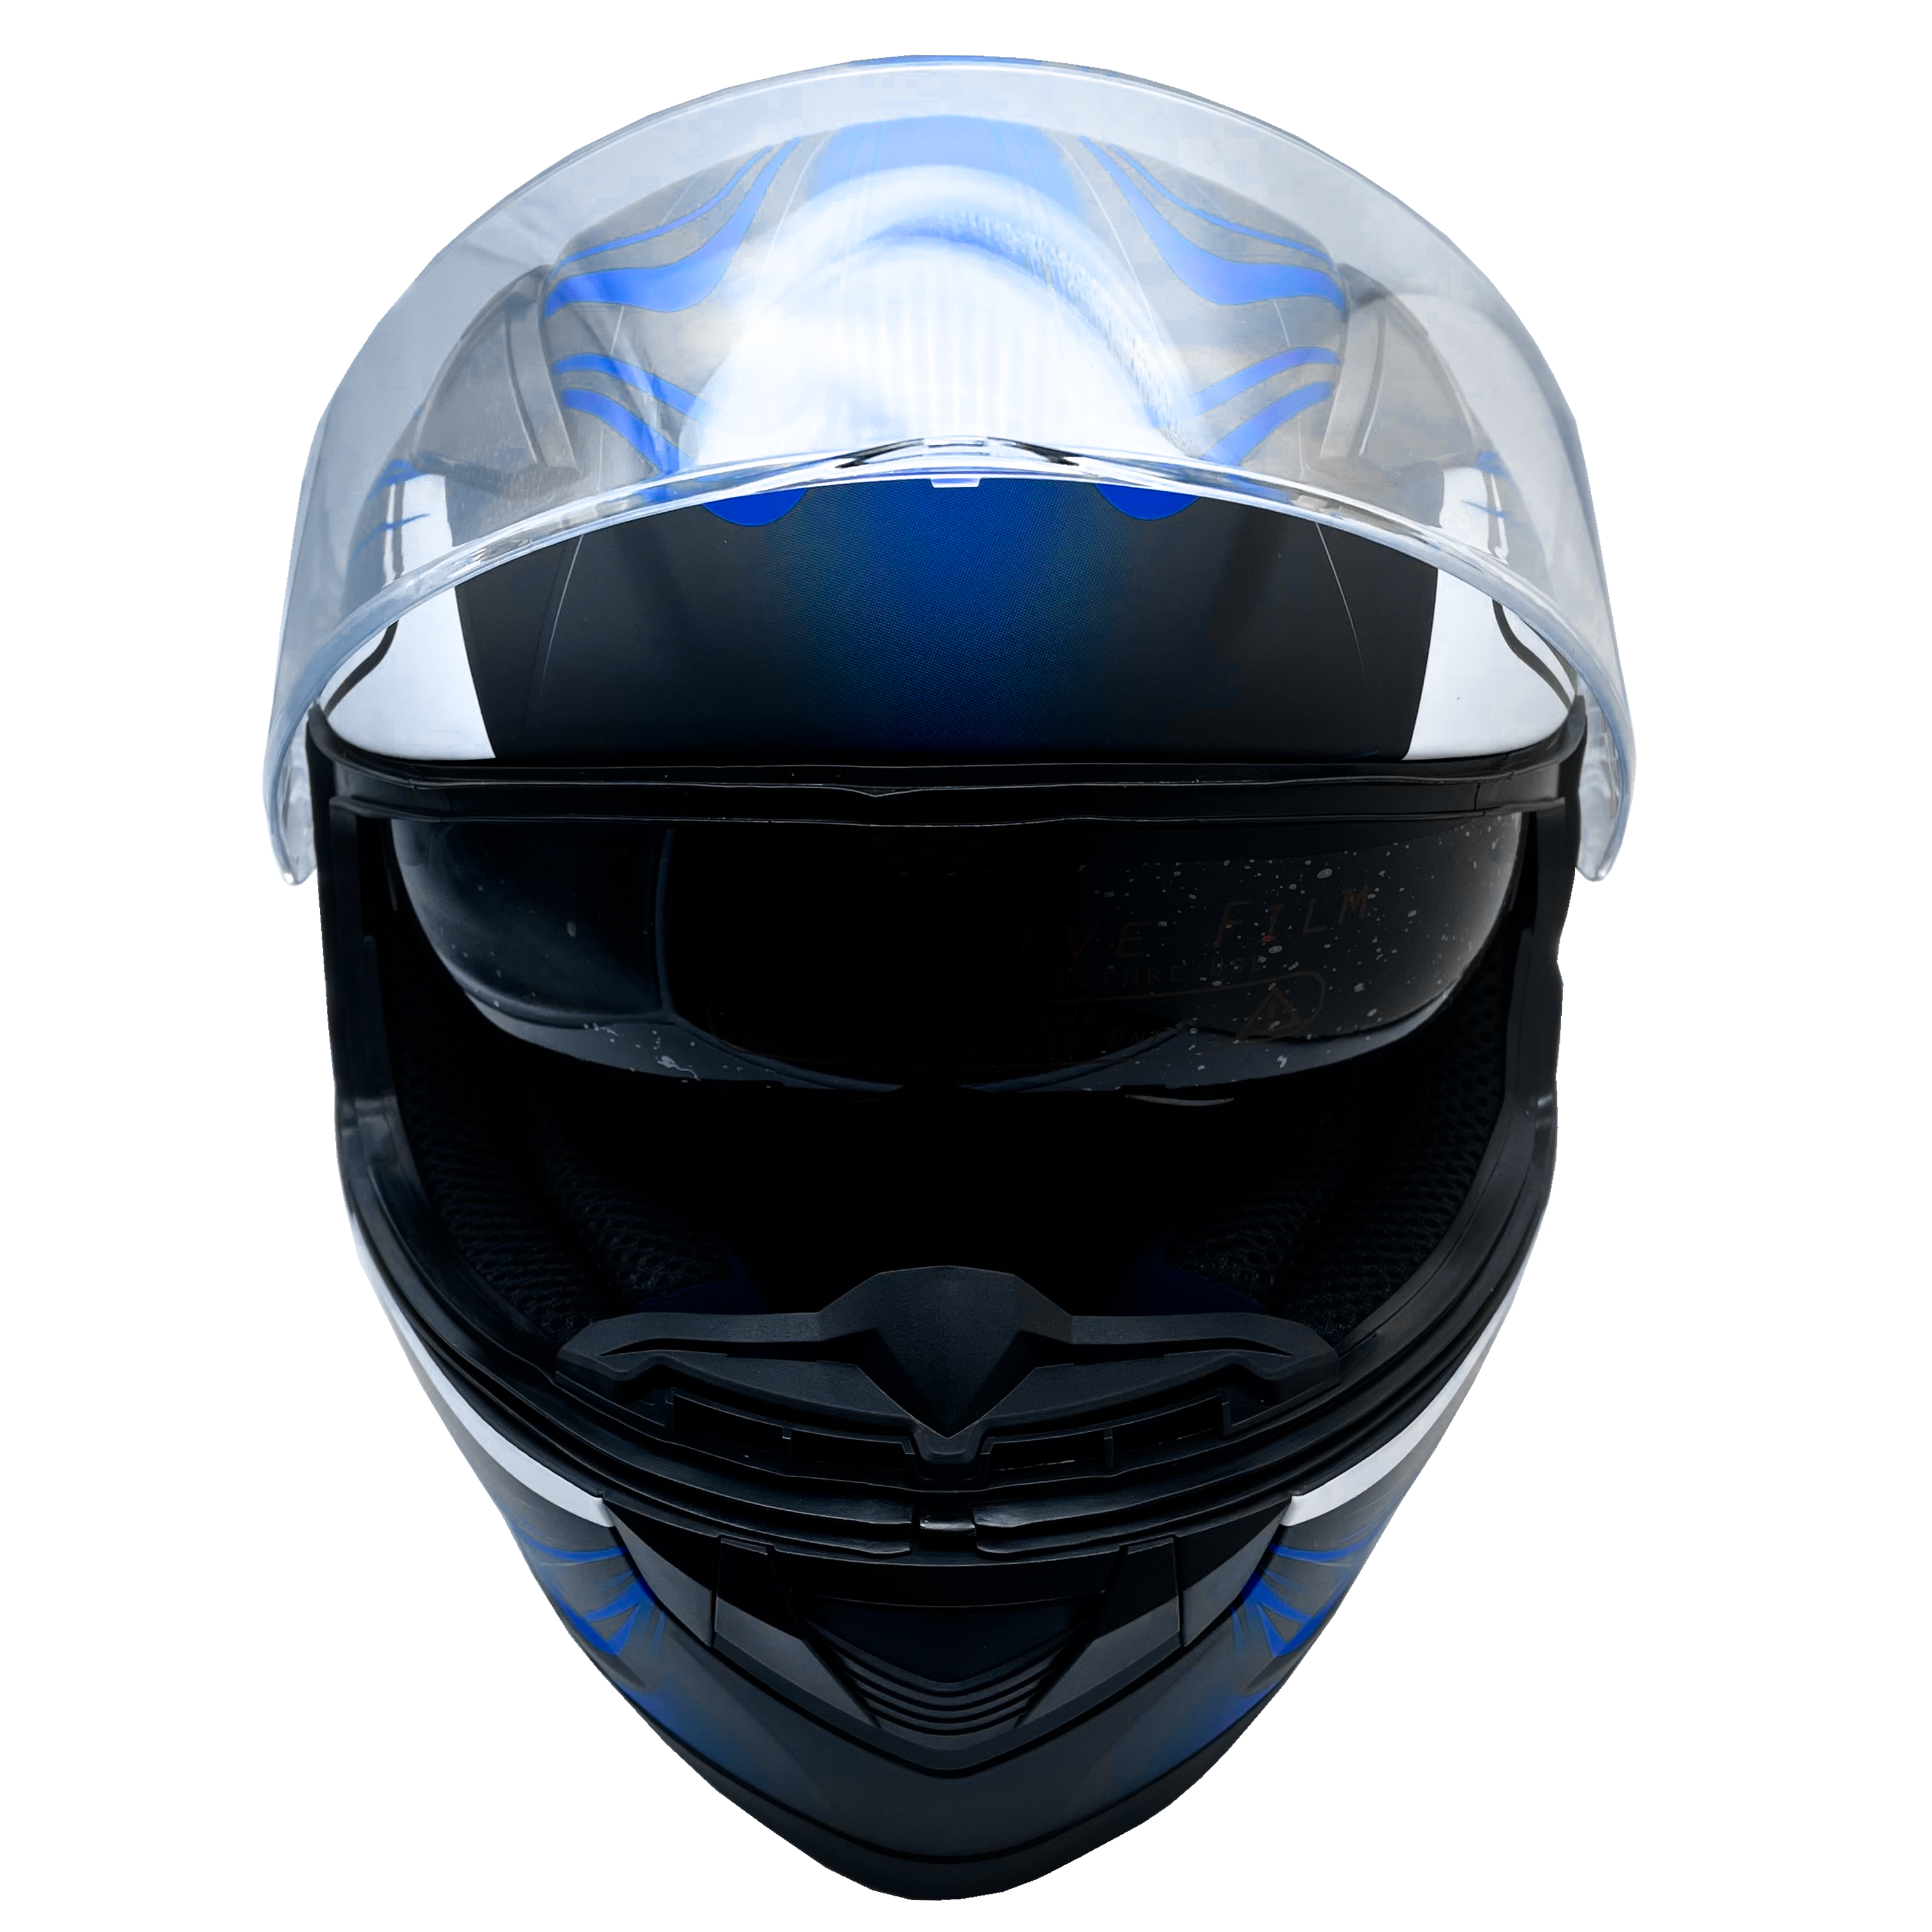 Black XS Adult Full Face Helmet w/ Retractable Sun Visor